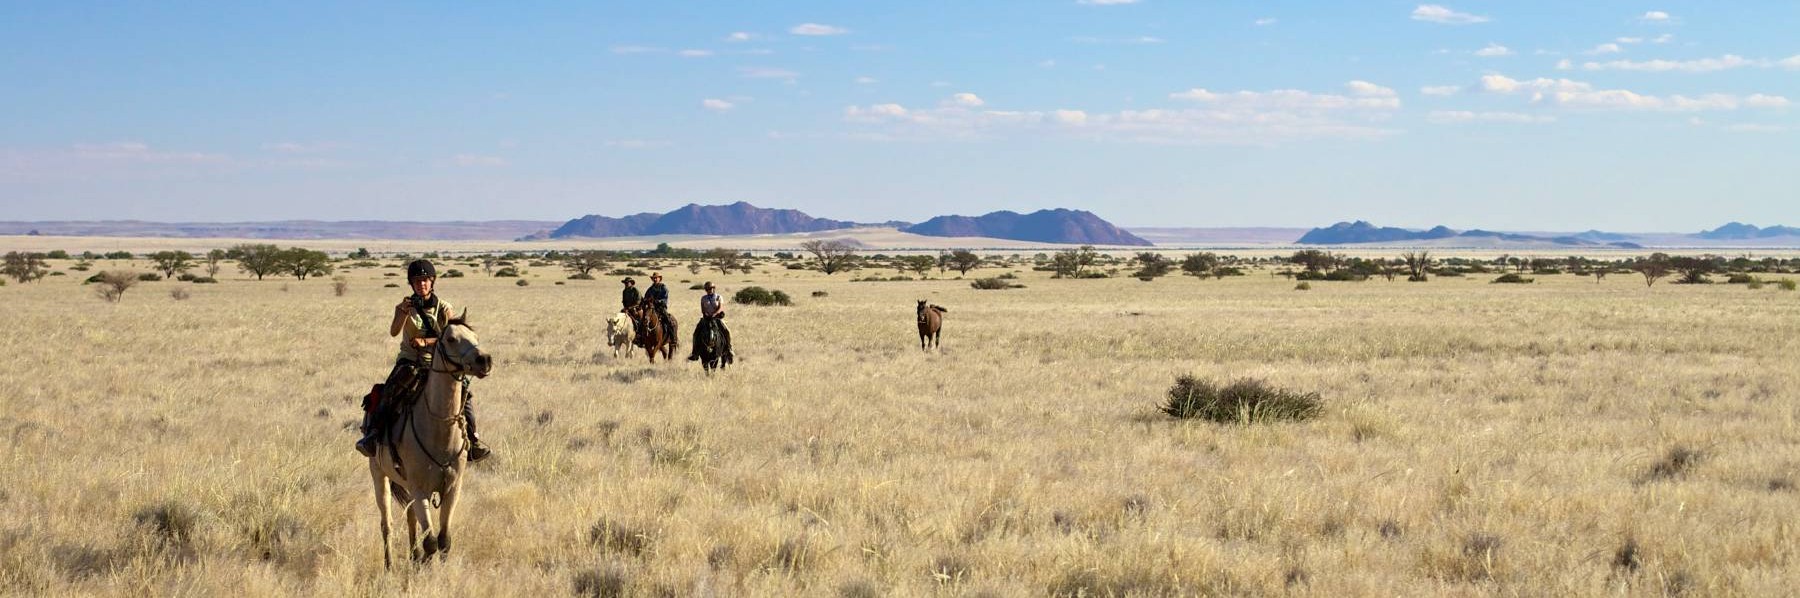 wild-horses-ride-in-namibia